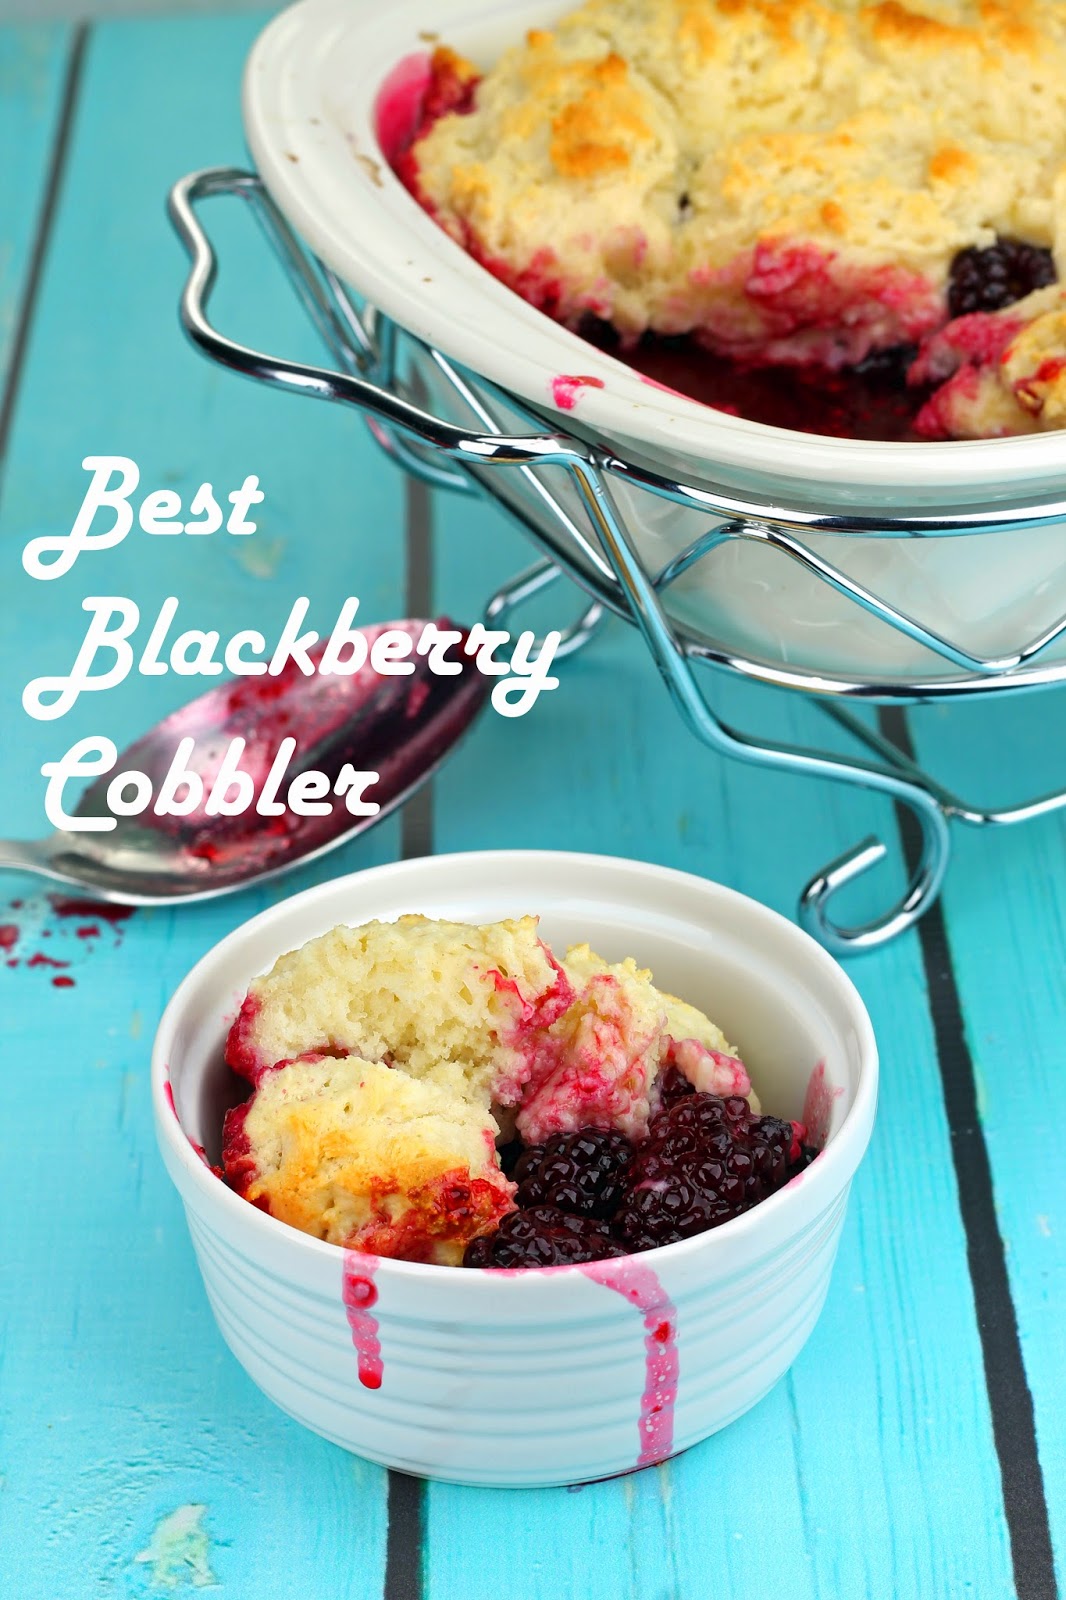 The Best Blackberry Cobbler (From Scratch) - thestayathomechef.com